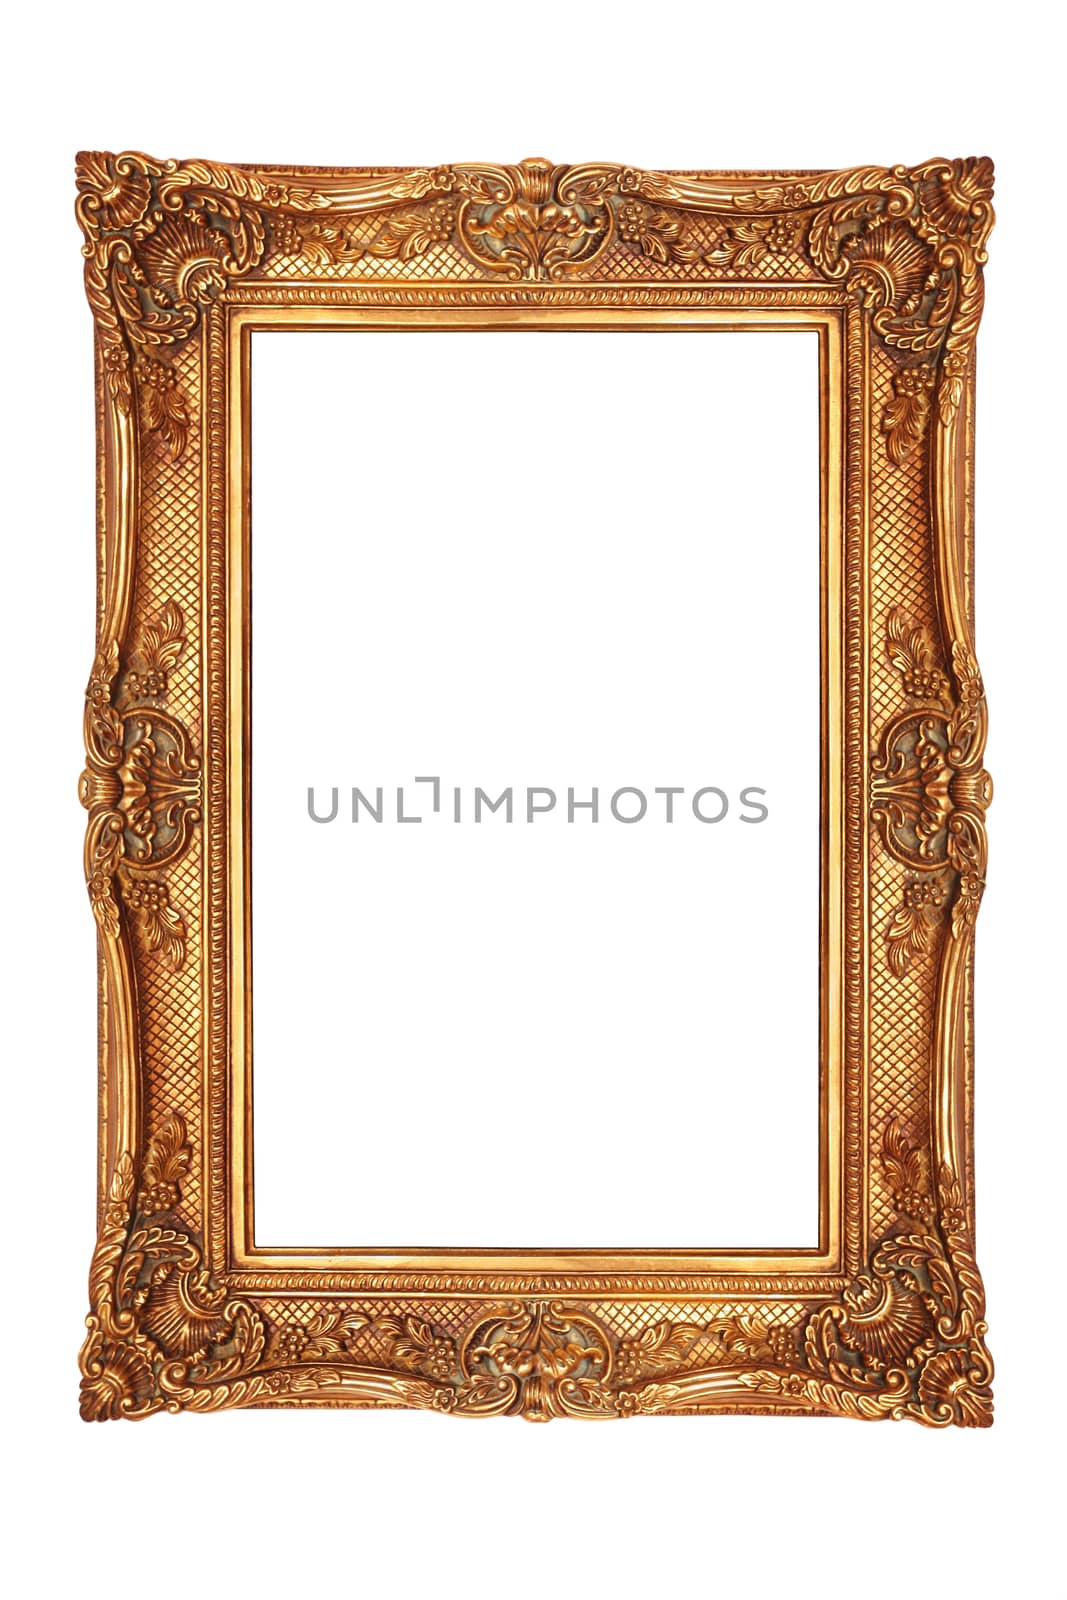 gilt frame in ancient style by yurii_bizgaimer